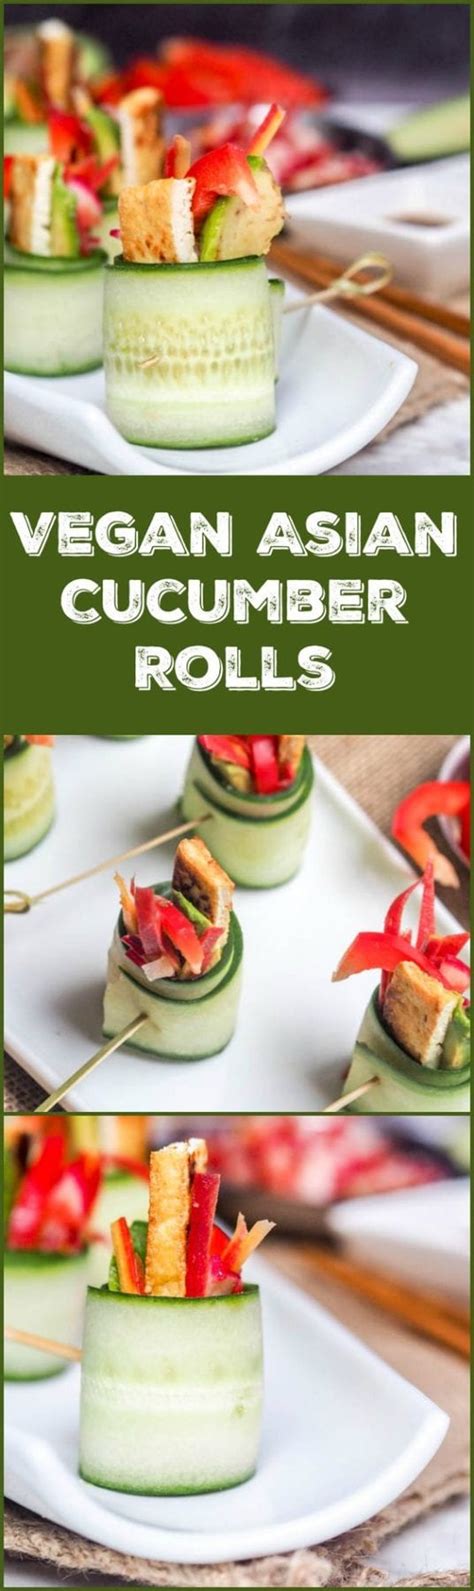 asian-vegan-cucumber-rolls-recipe-gluten-free image